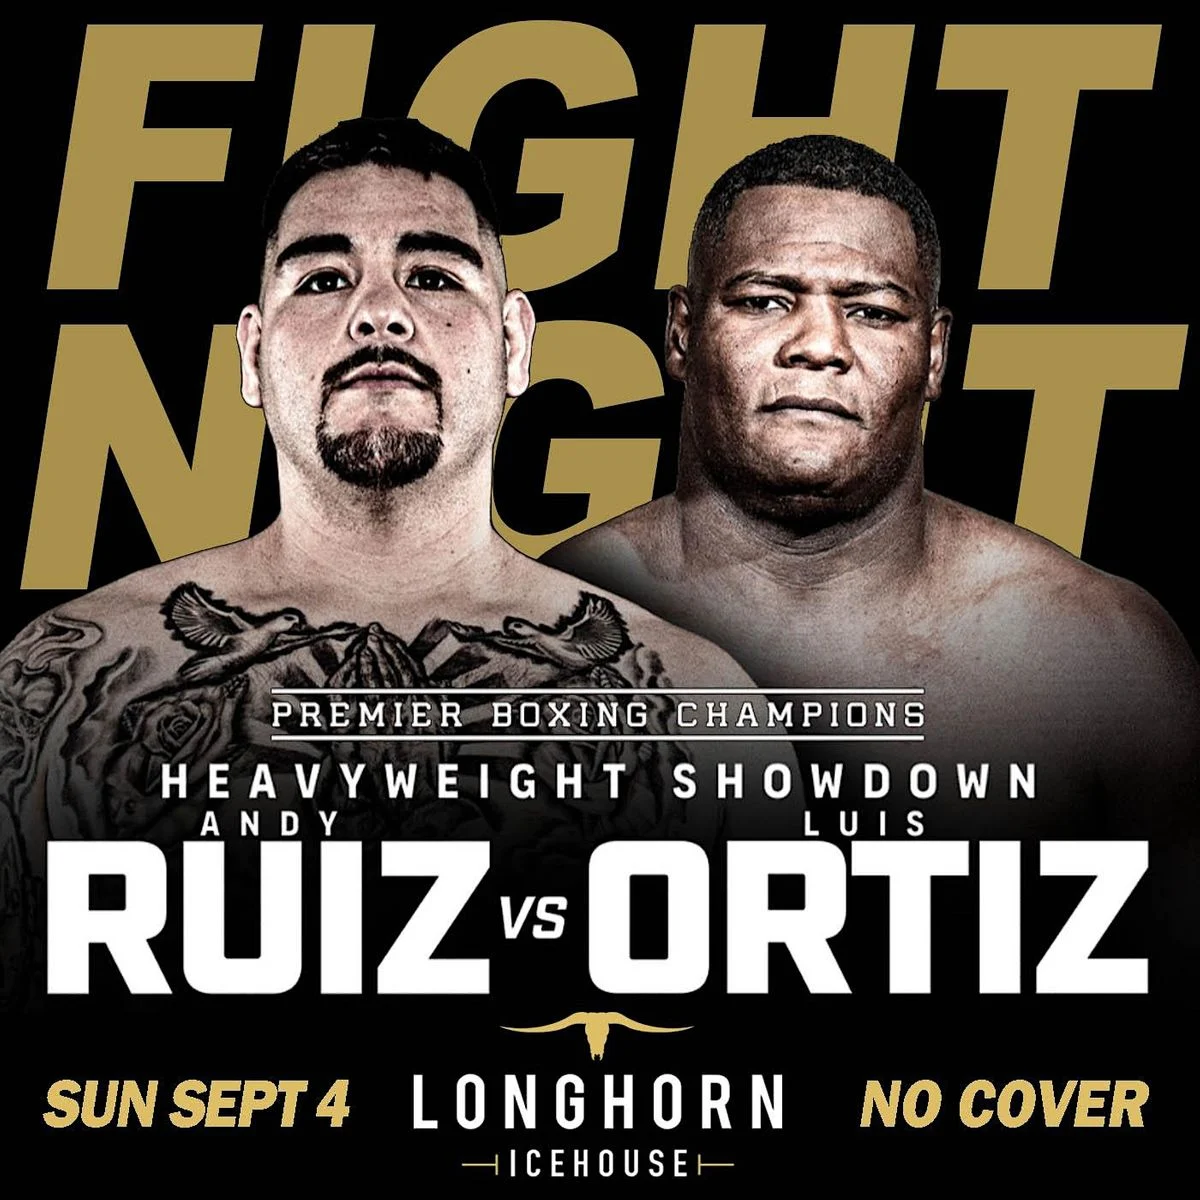 Andy Ruiz vs Luiz Ortiz Date, Time, Venue, Tickets, and Live Stream